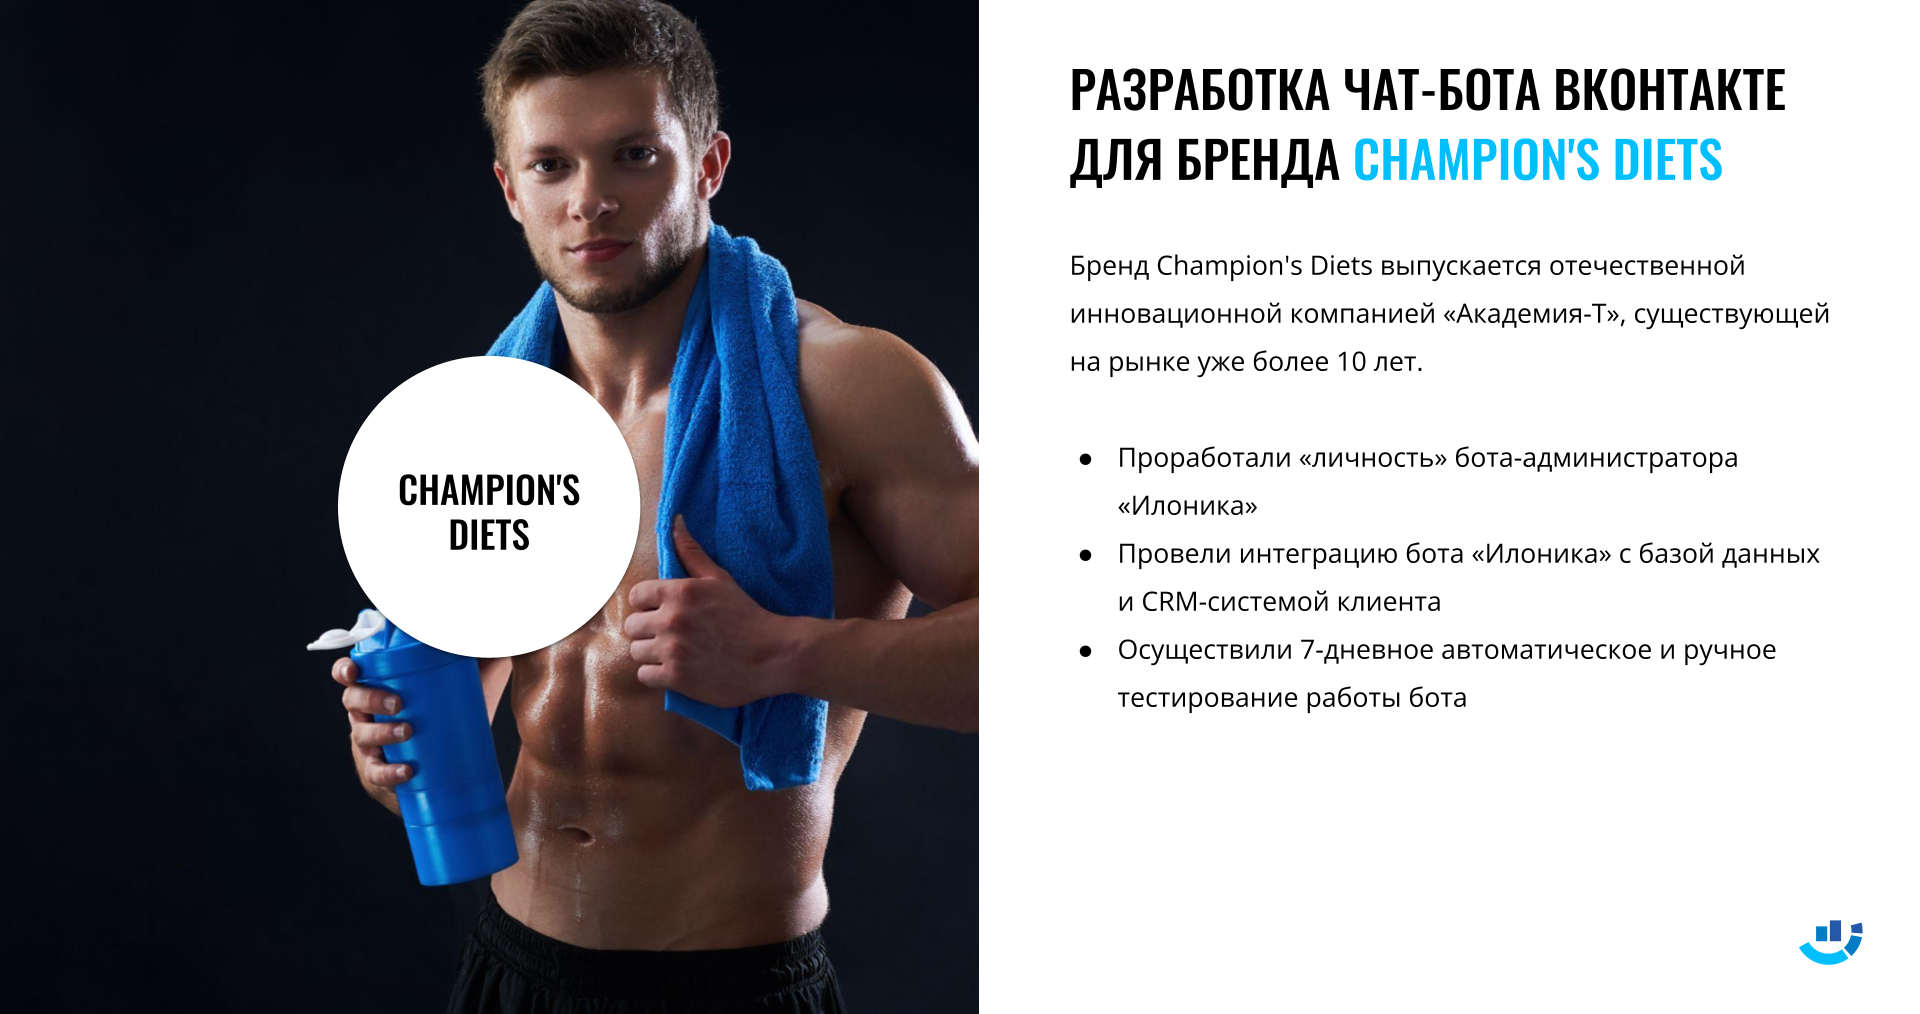 [Кейс] Разработка чат-бота ВКонтакте для бренда Champion’s Diet